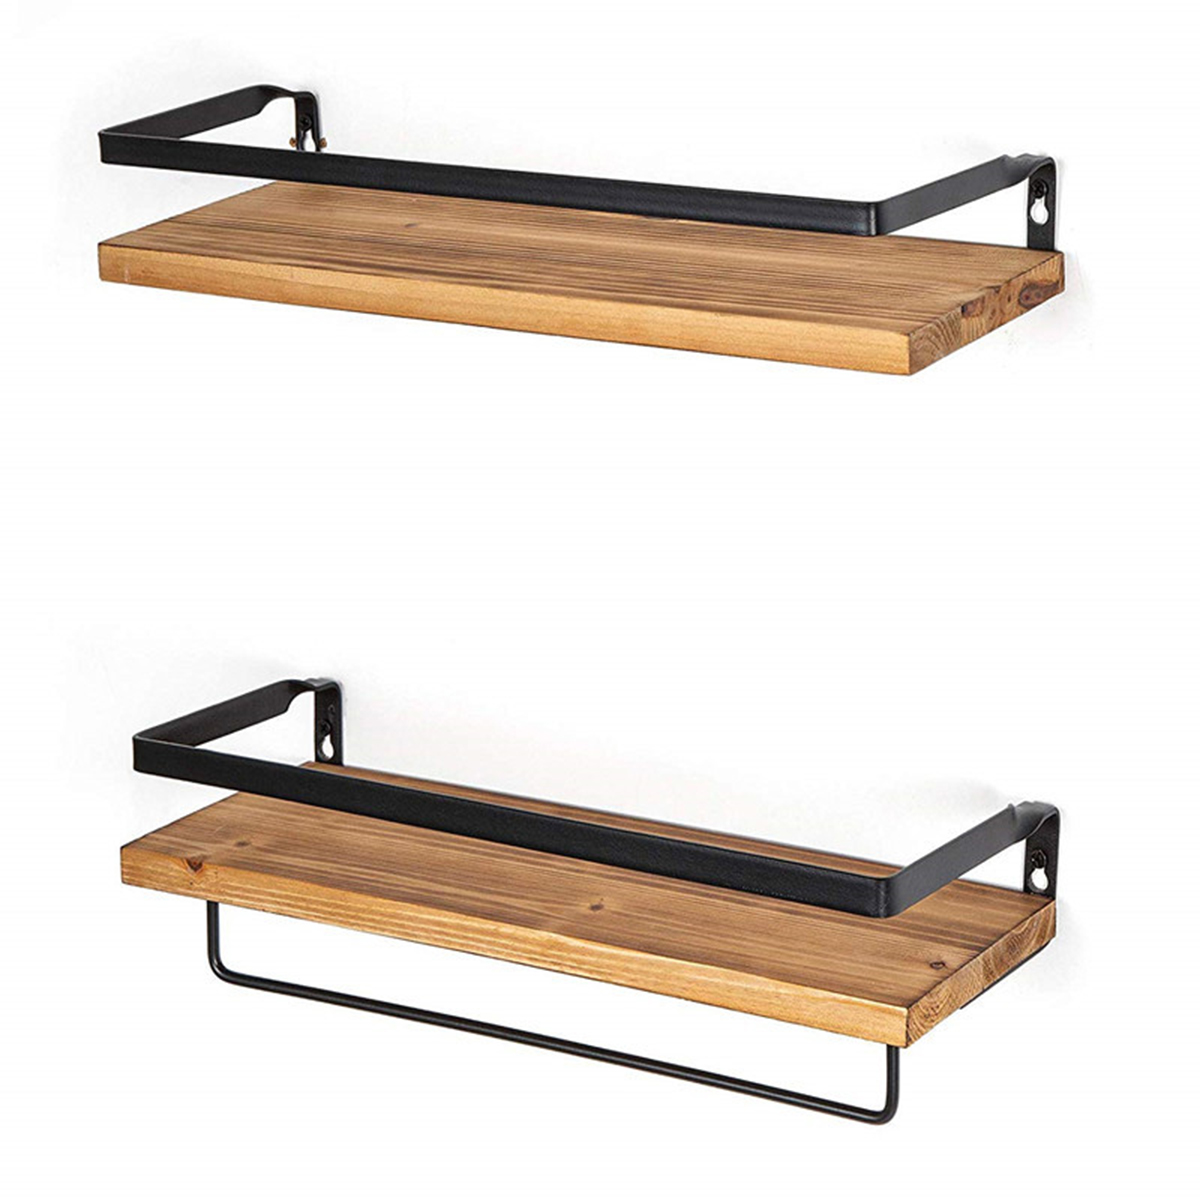 2PCS Wall Shelf Floating Wood Storage Shelf Rack Storage Kitchen Bathroom - Brown Colour